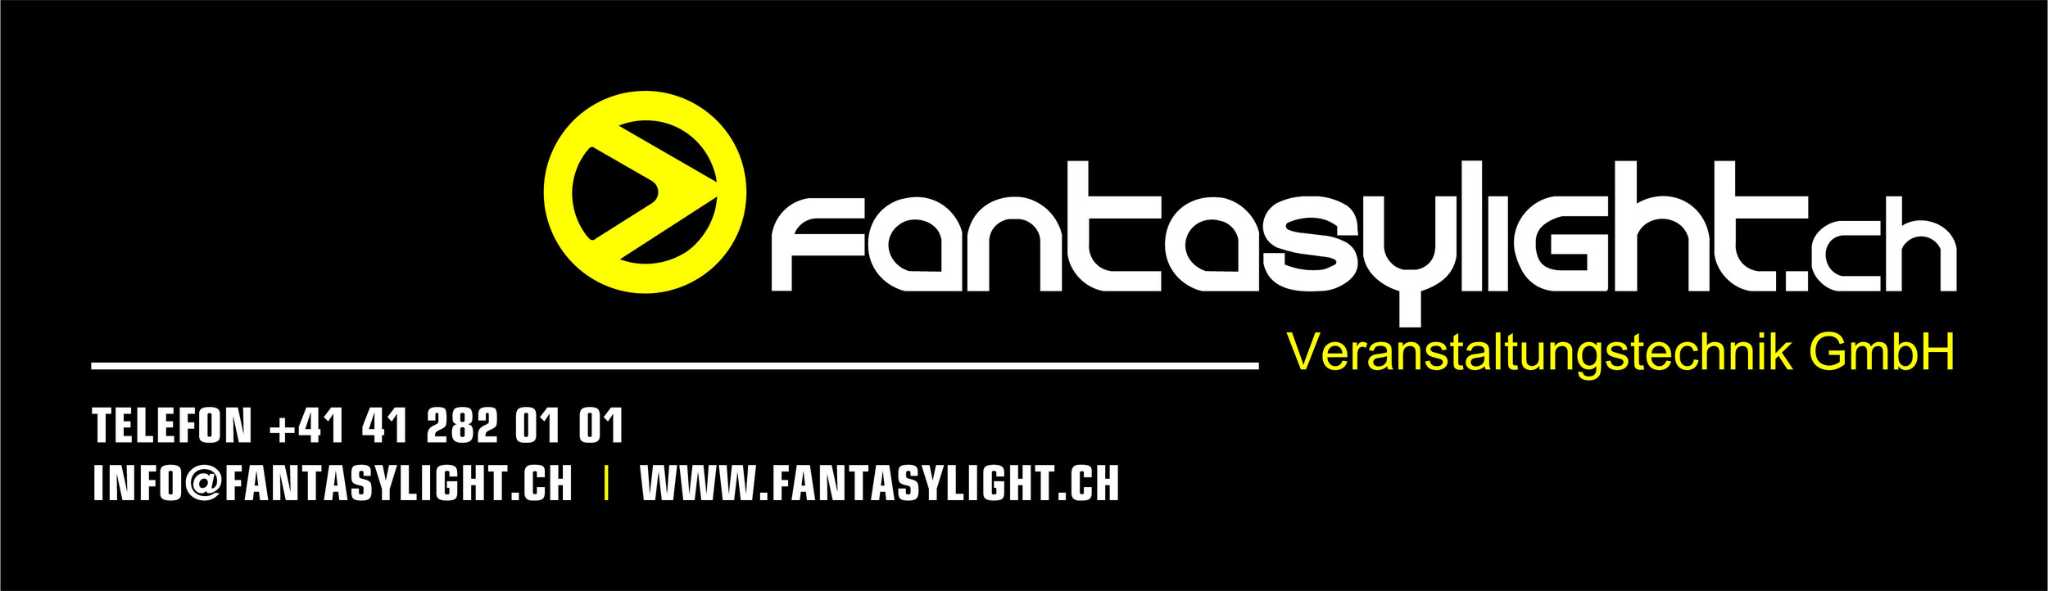 FantasyLight Veranstaltungstechnik GmbH